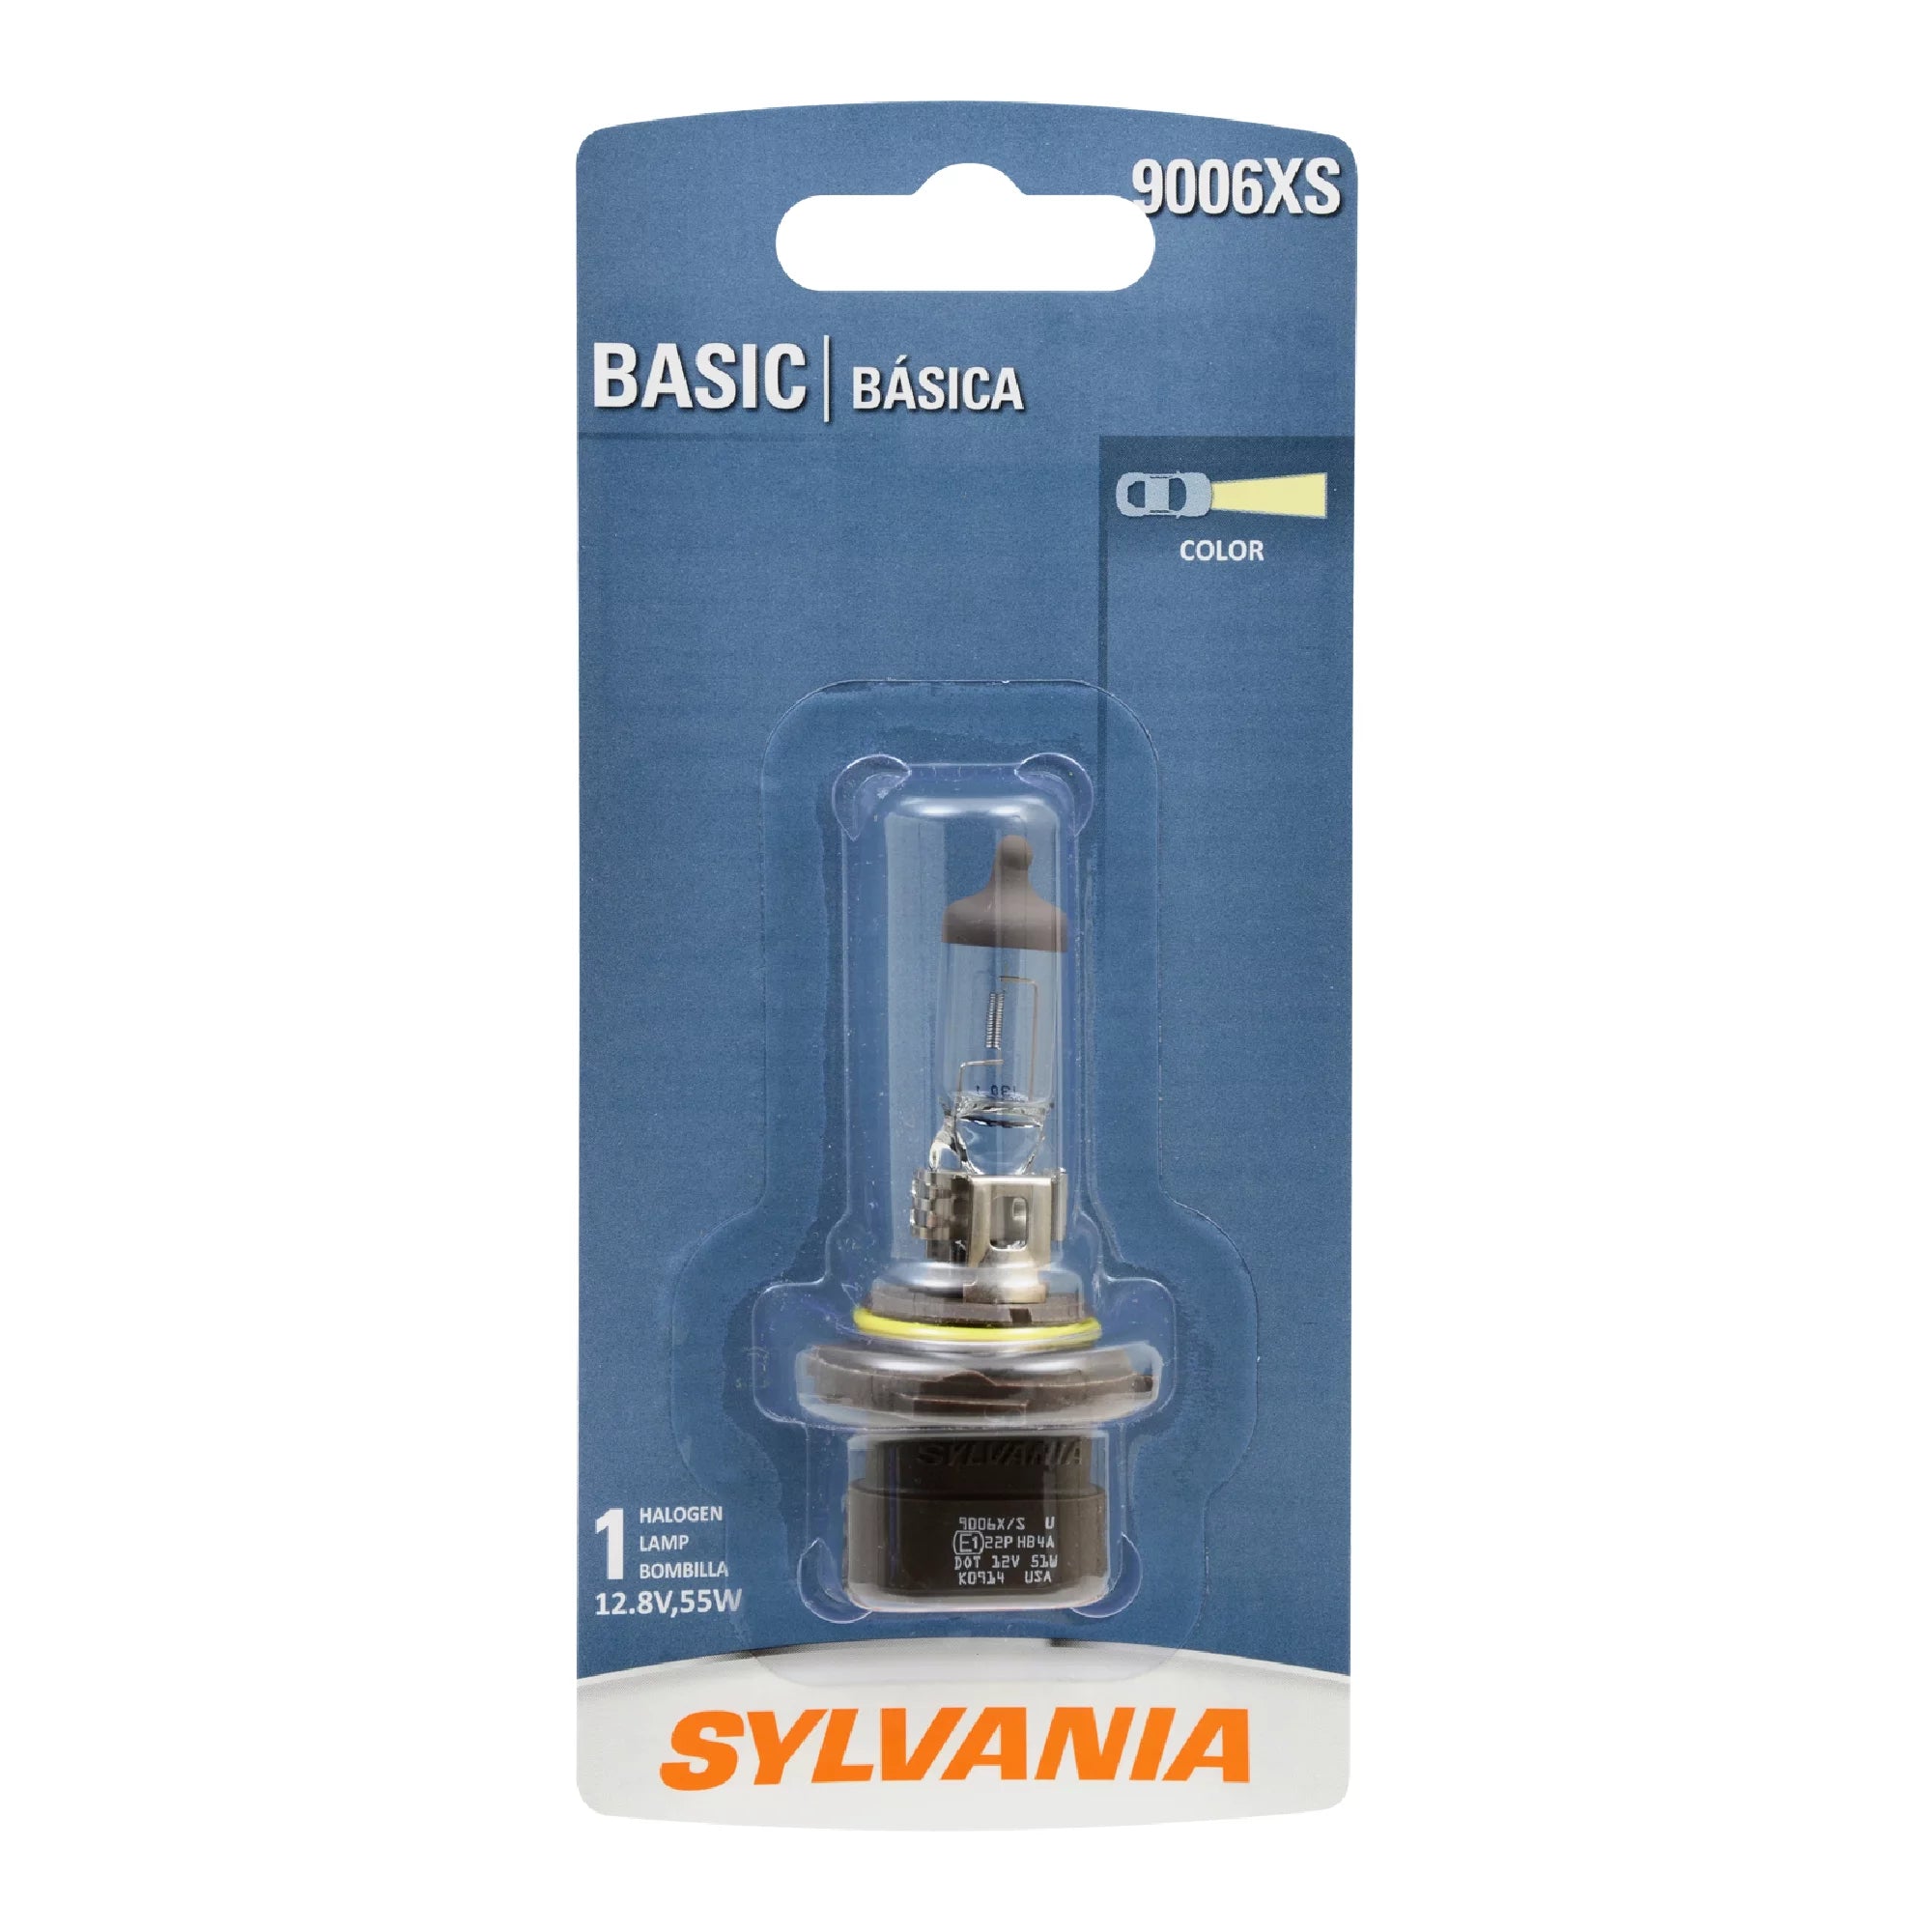 SYLVANIA 9006XS Basic Auto Halogen Headlight Bulb (Pack of 1)